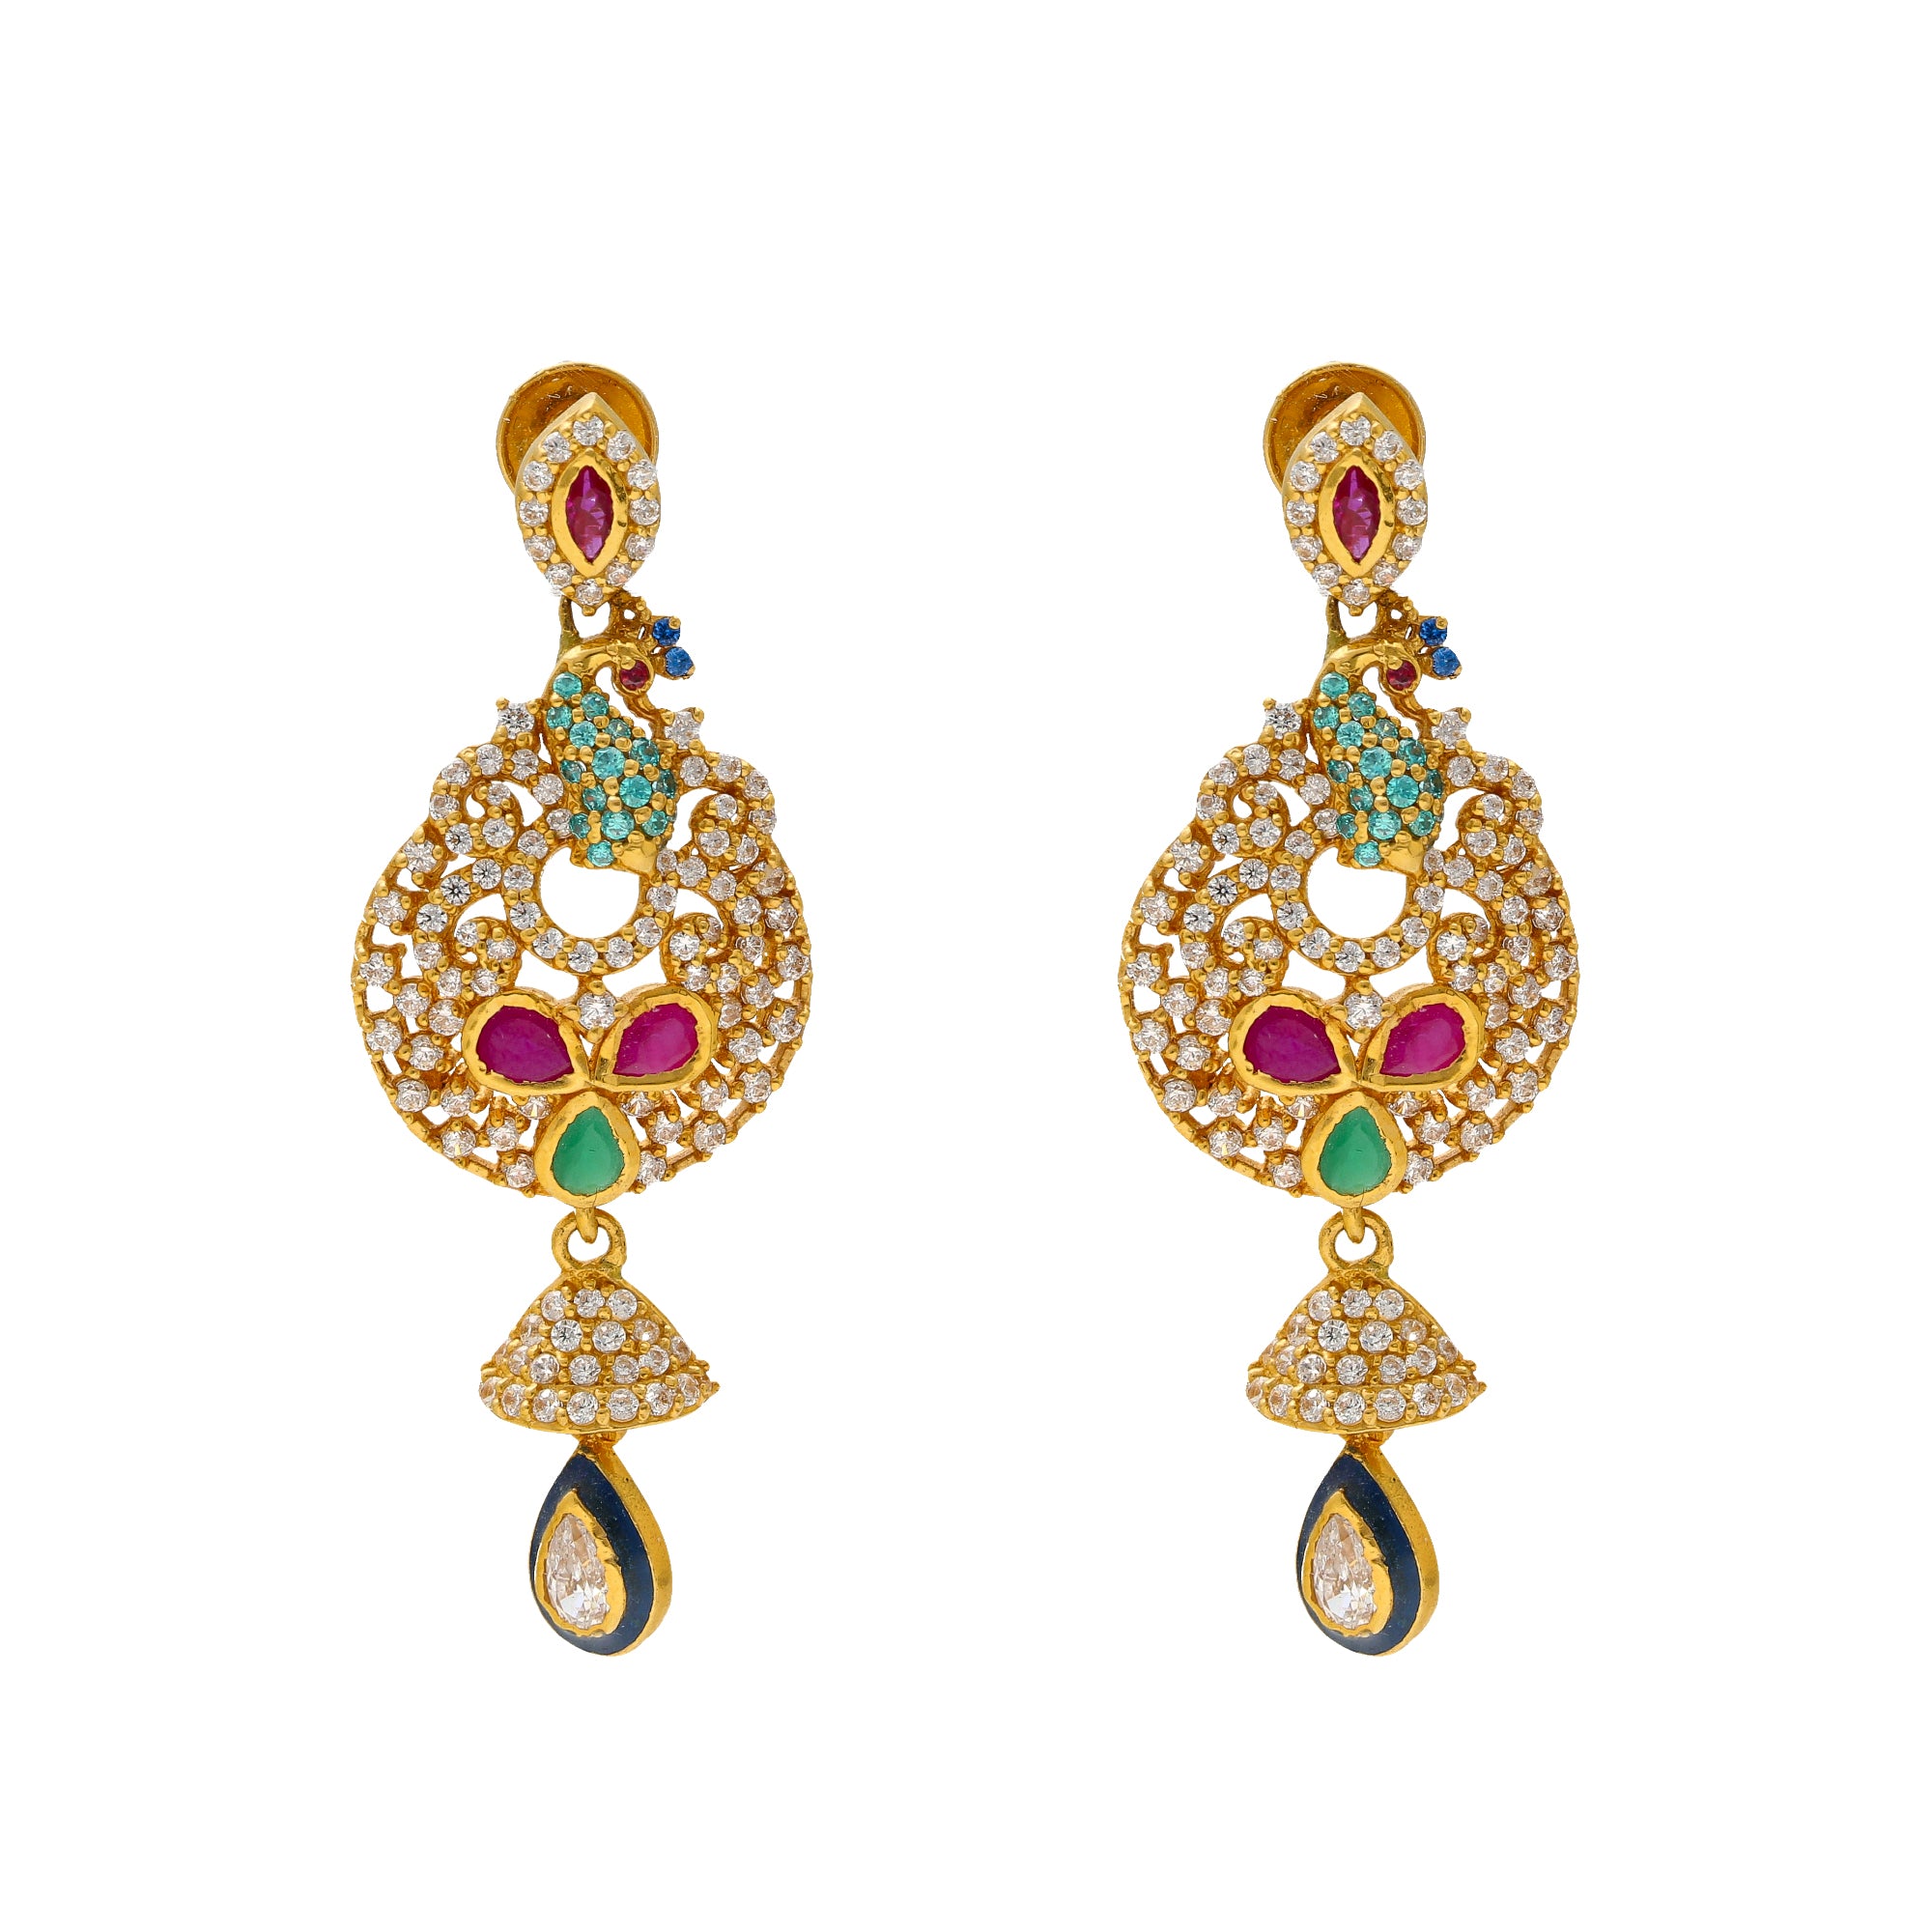 235-GER6606 - Makarakundanalu - 22K Gold Hoop Earrings with Ruby , Emerald  , Beads & Pearls | Gold earrings designs, Gold rings fashion, Earrings